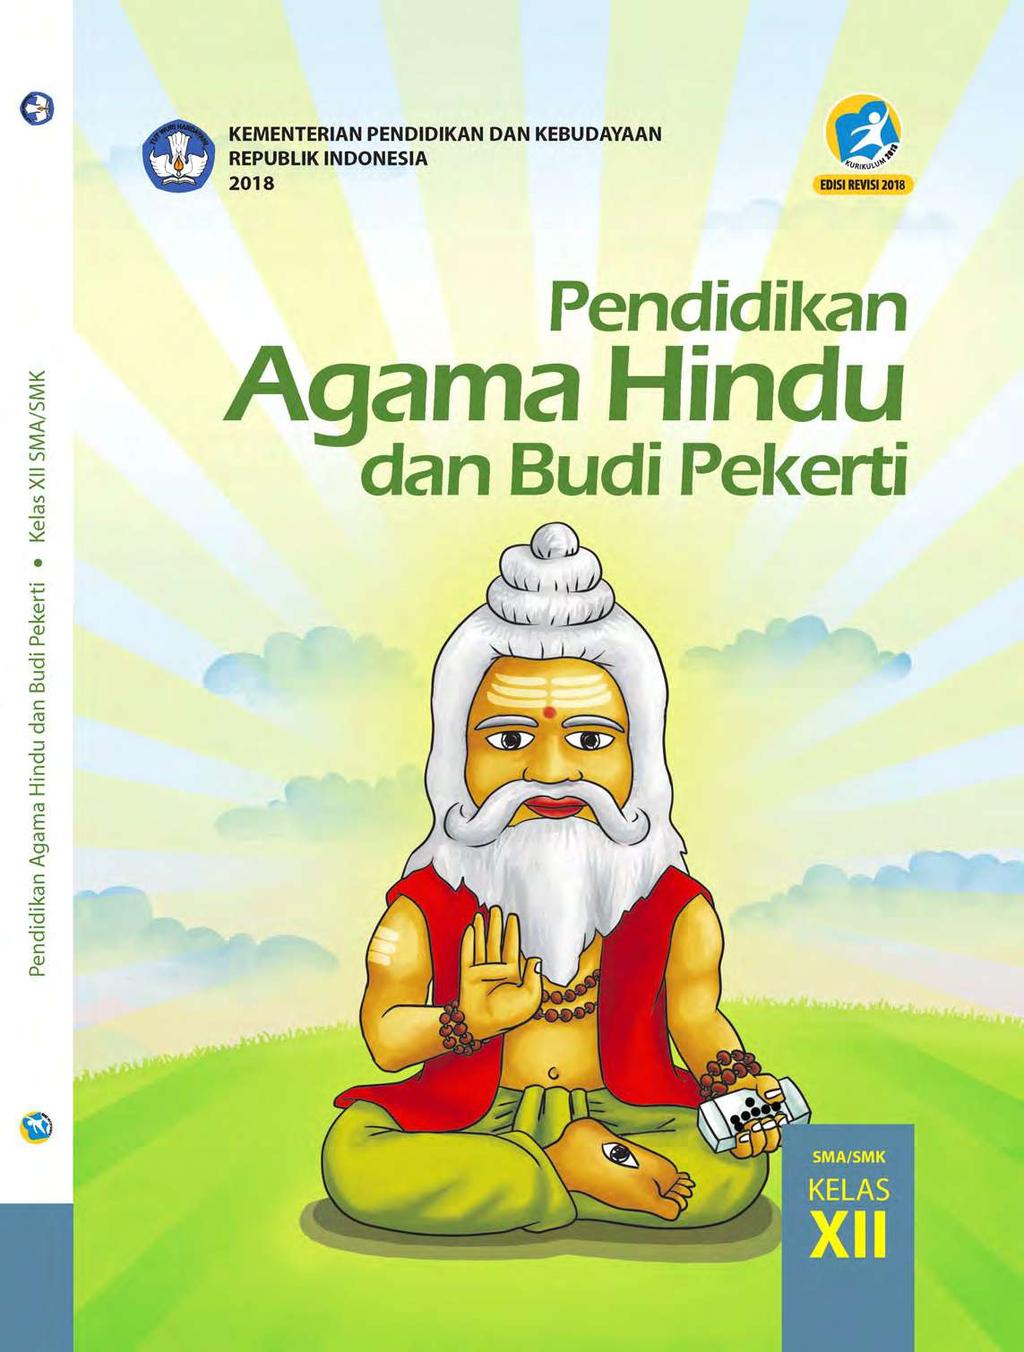 Meskipun masyarakat indonesia sudah menganut agama hindu, tetapi masih nampak pengaruh unsur kebudayaan asli indonesia, yaitu berupa yupa yang menyerupai pendirian